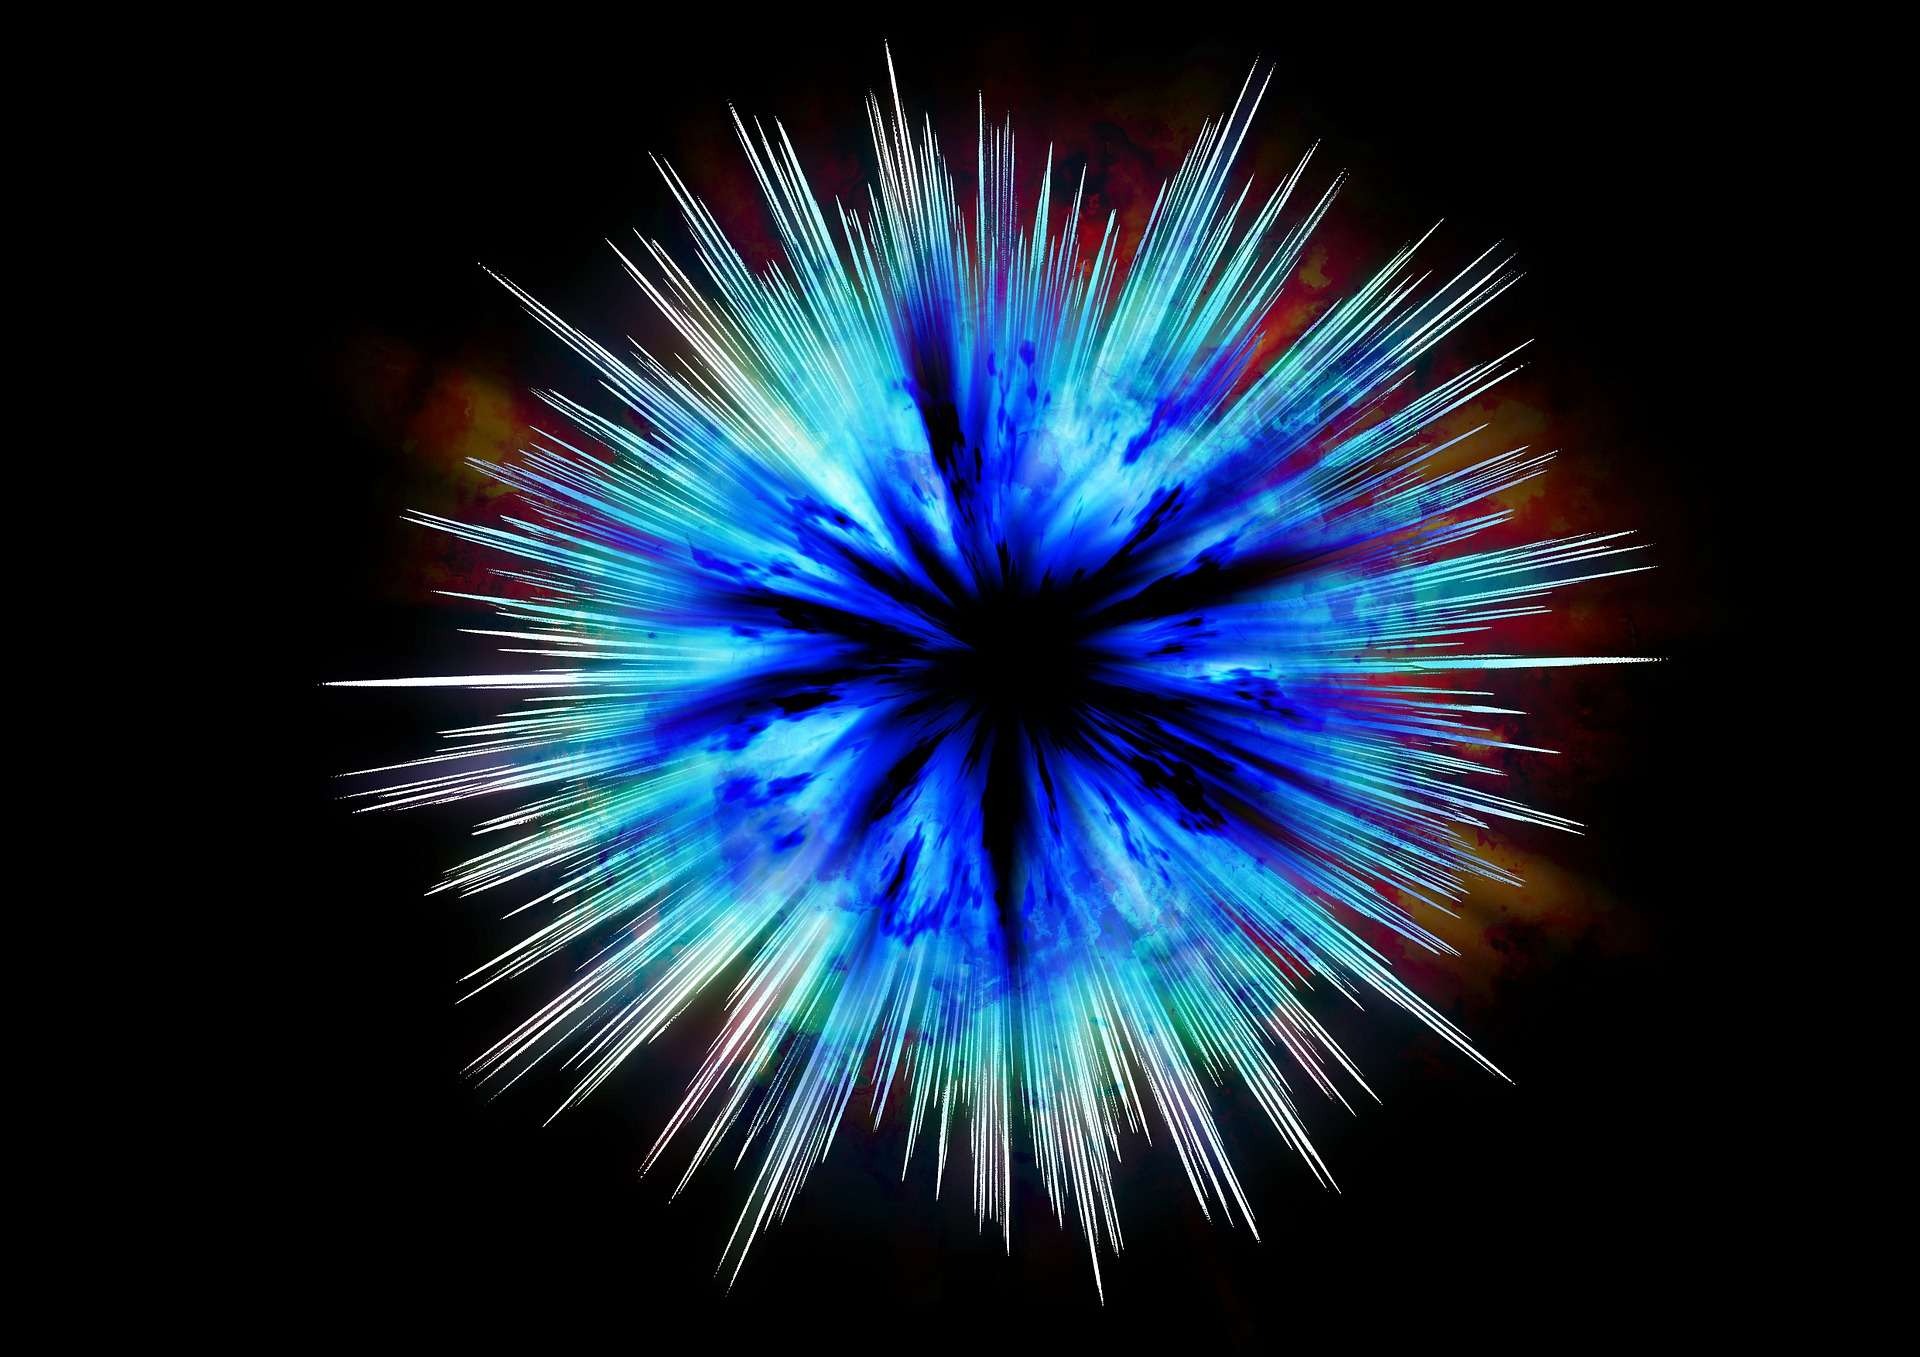 big bang 422749 1920 - Big-Bang: Was ist das? Eine Definition